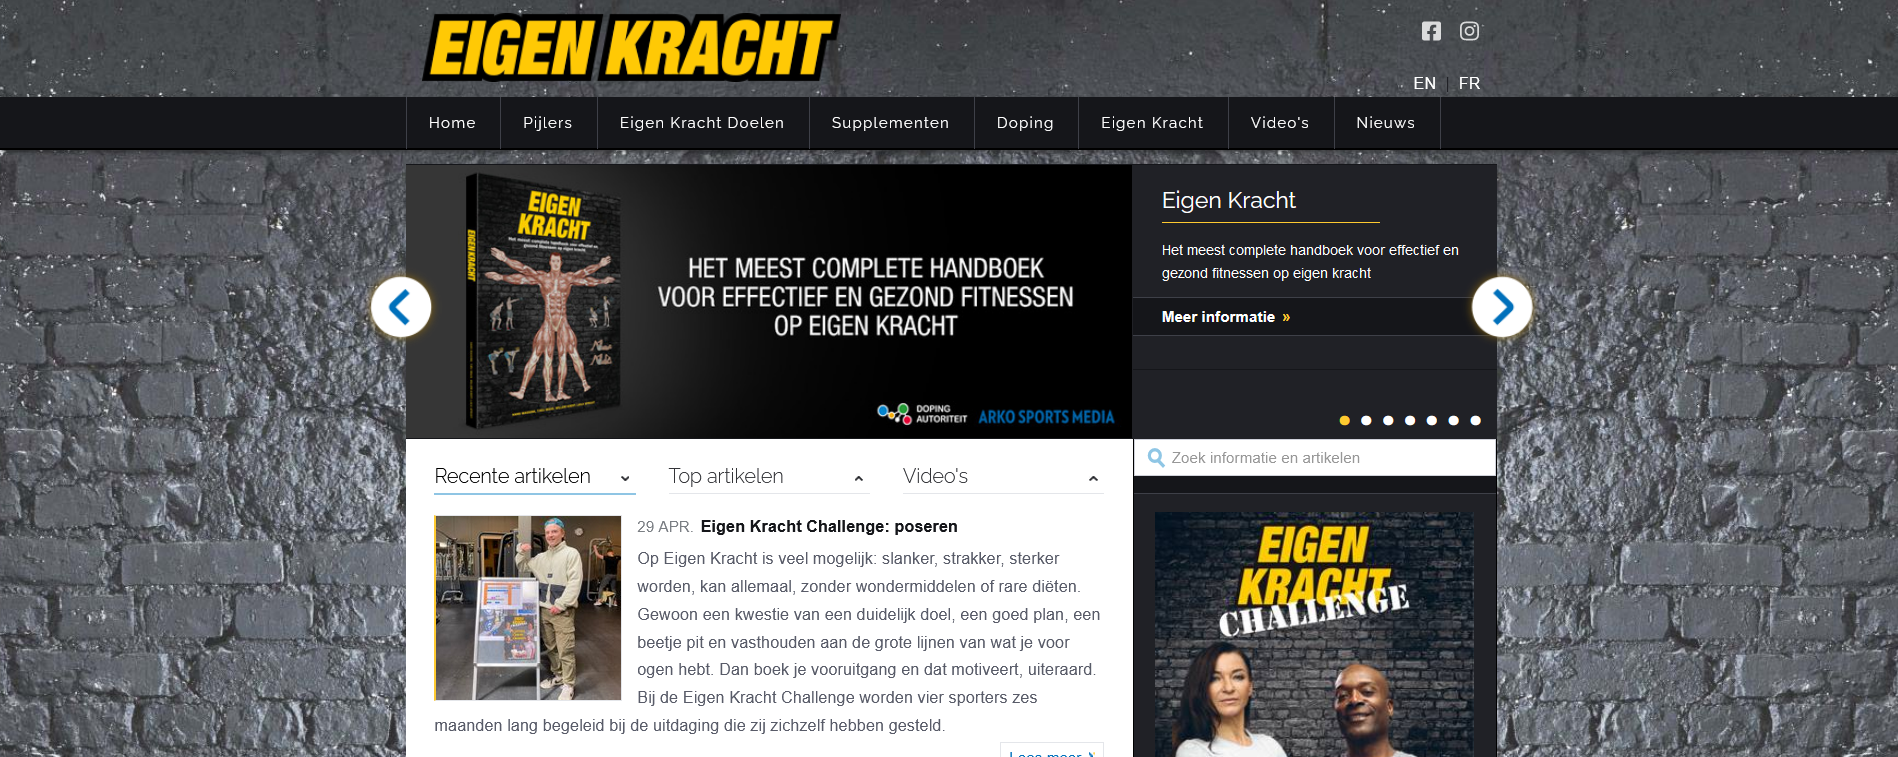 Website Eigen Kracht